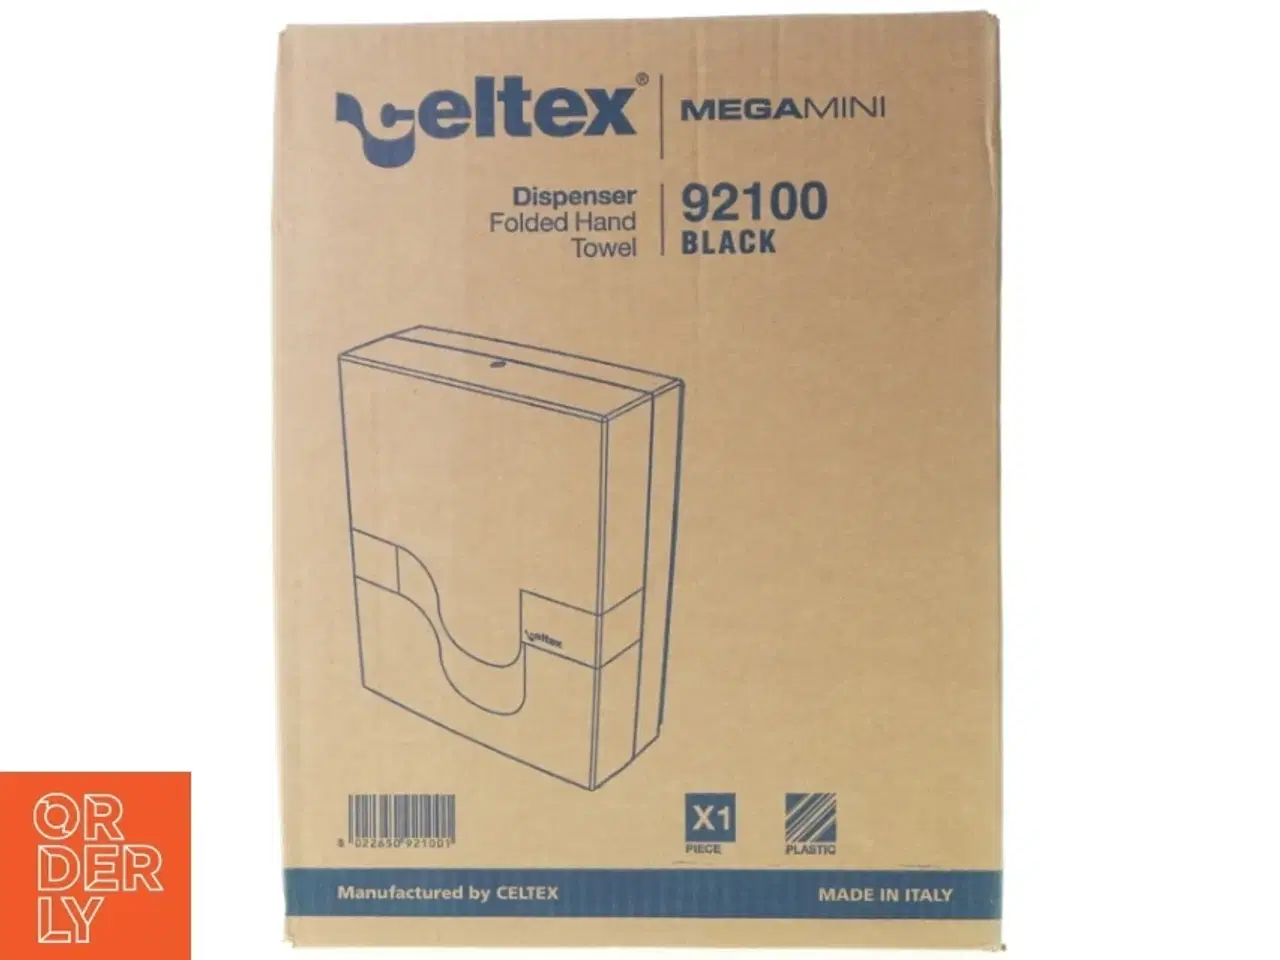 Billede 1 - Dispenser folded hand towel mega mini 9 2 1 0 0 black fra Celtex (str. 36 x 28 x 12 cm)